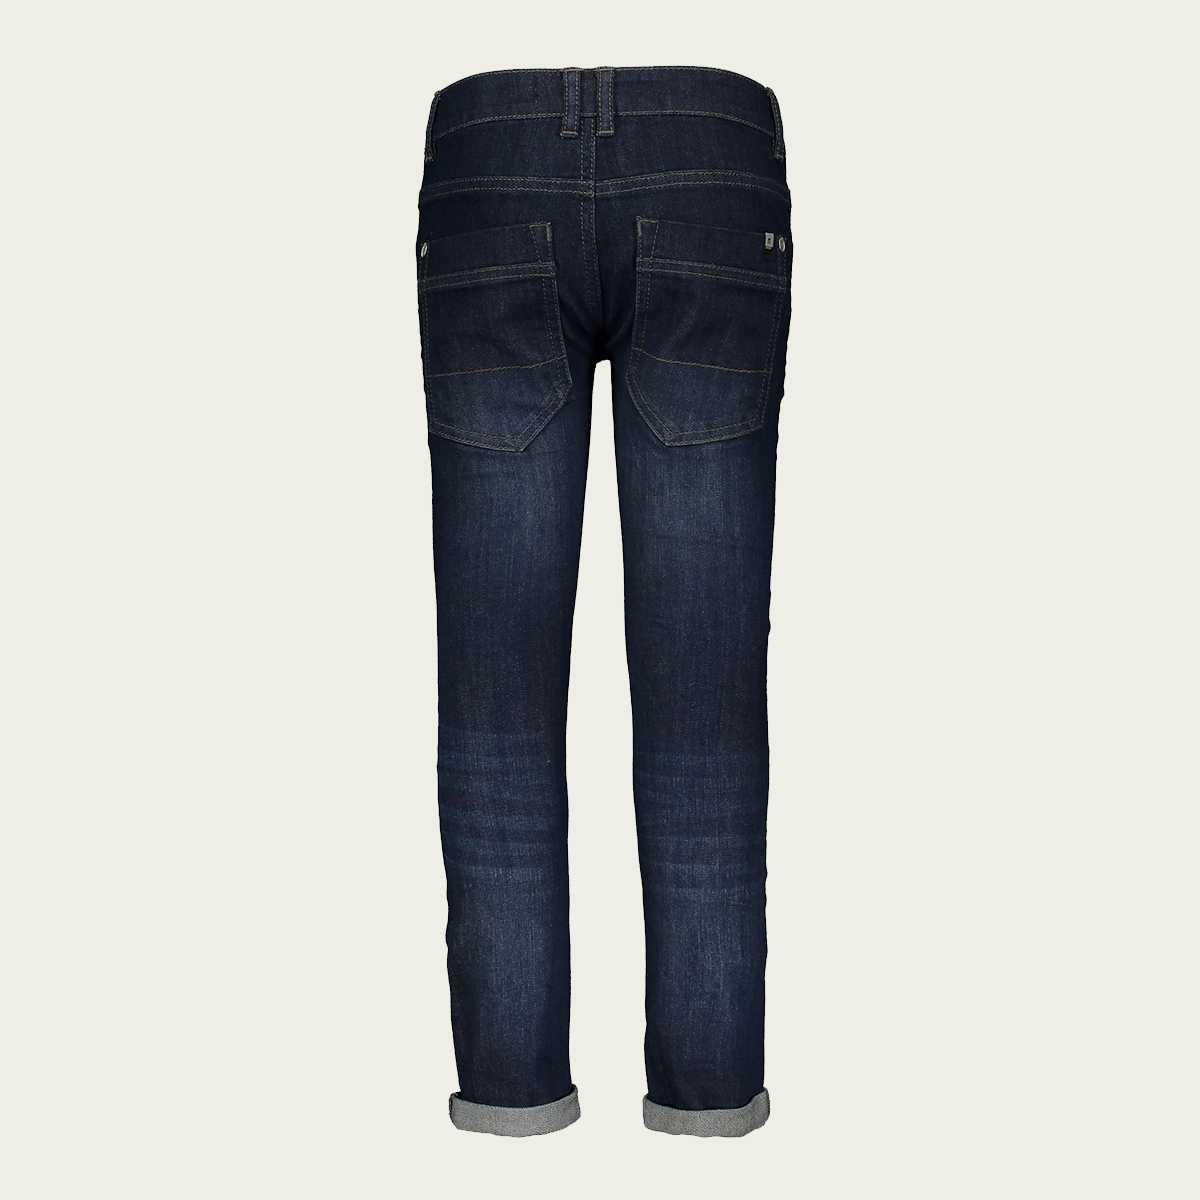 Moodstreet - Jeans broek stretch